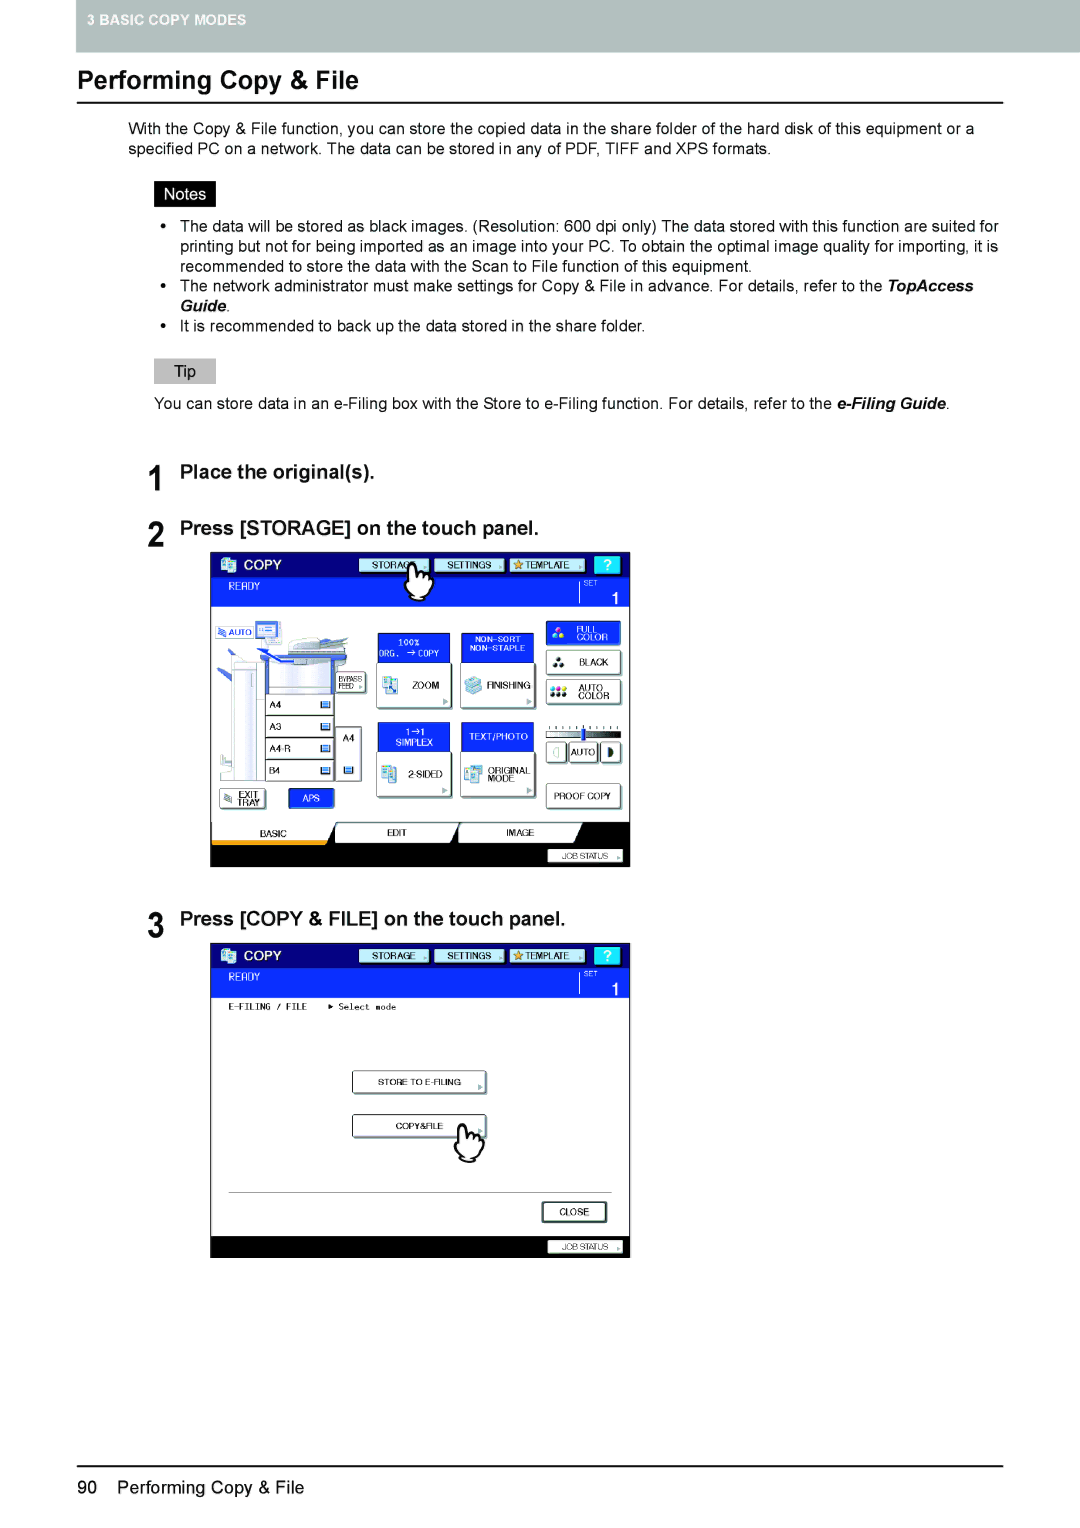 Toshiba 6520c, e-STUDIO5520C manual Performing Copy & File 